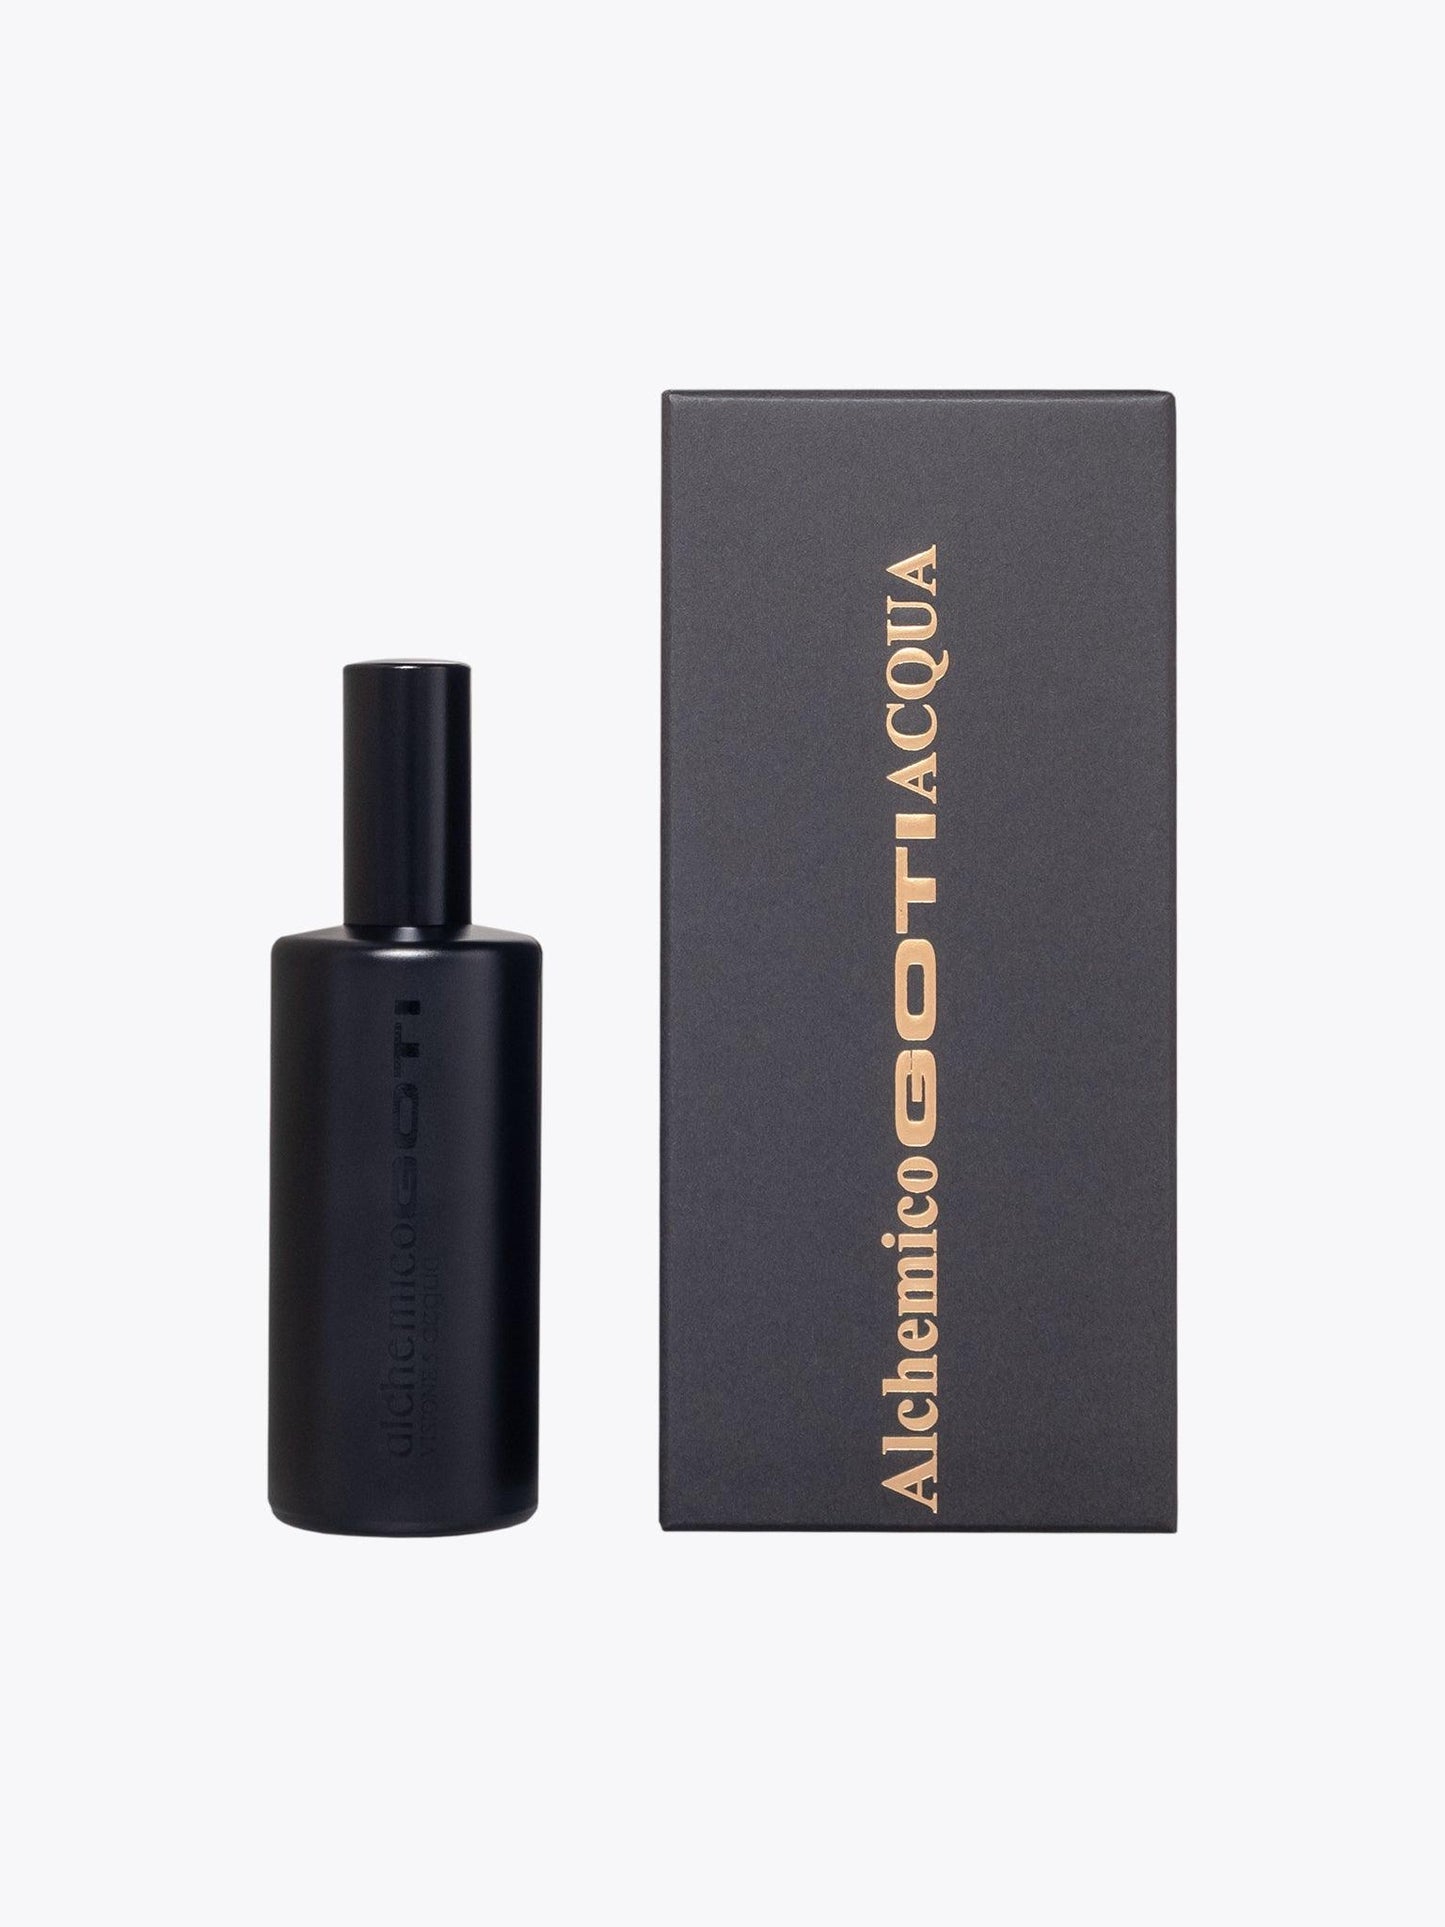 GOTI Acqua Alchemico Visione 5 Perfume 100 ml - APODEP.com